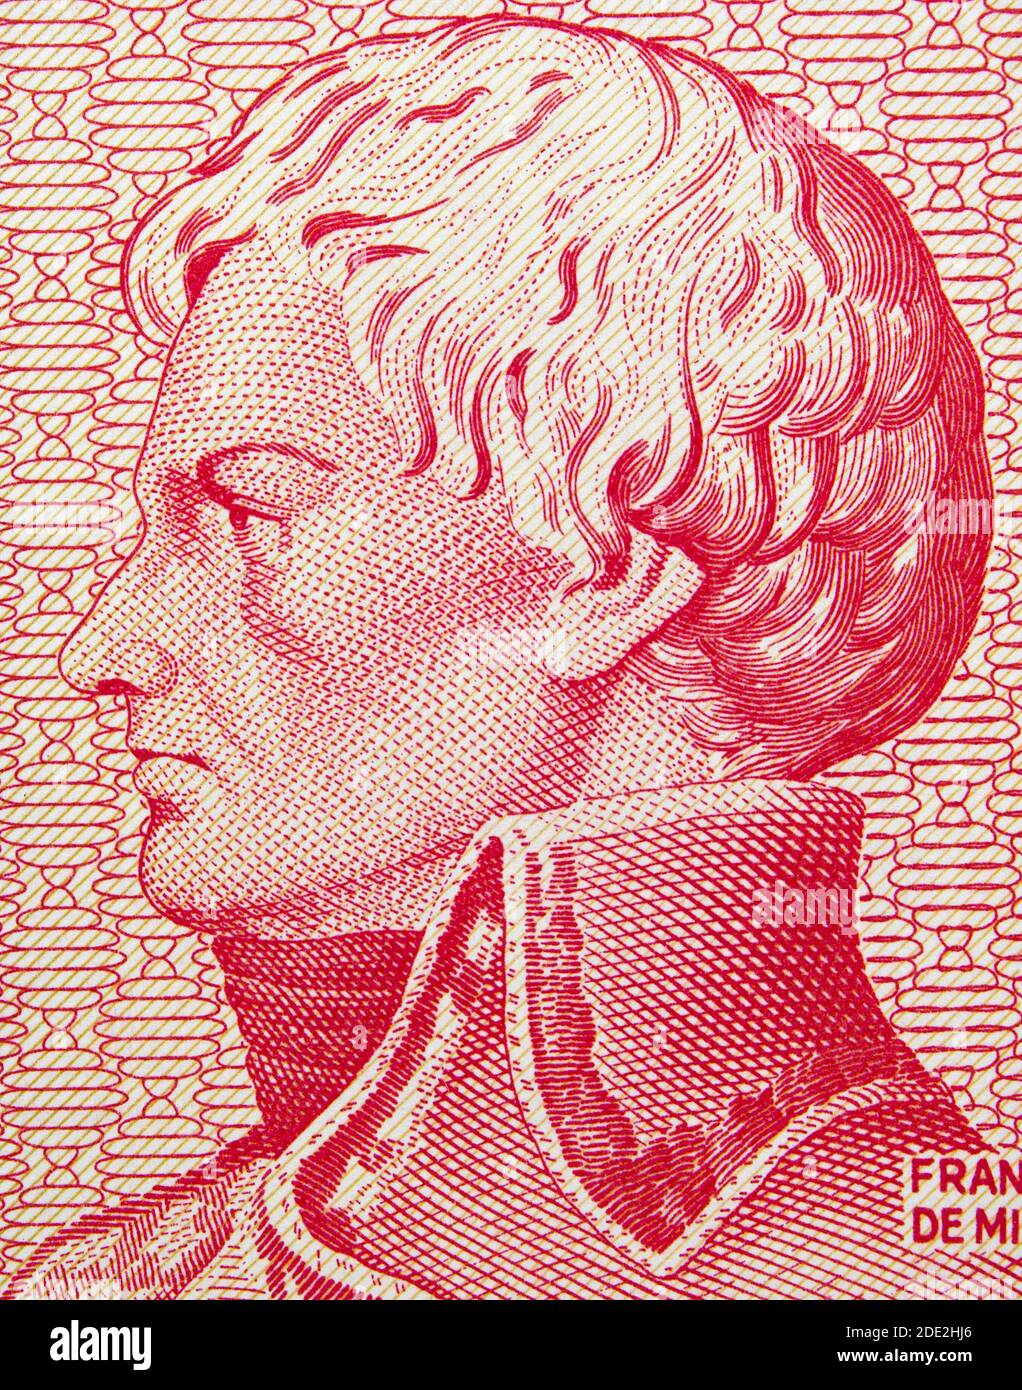 Francisco de Miranda (1750-1816) portrait on Venezuela 5 bolivares (1989) banknote macro, Venezuelan money closeup. Stock Photo